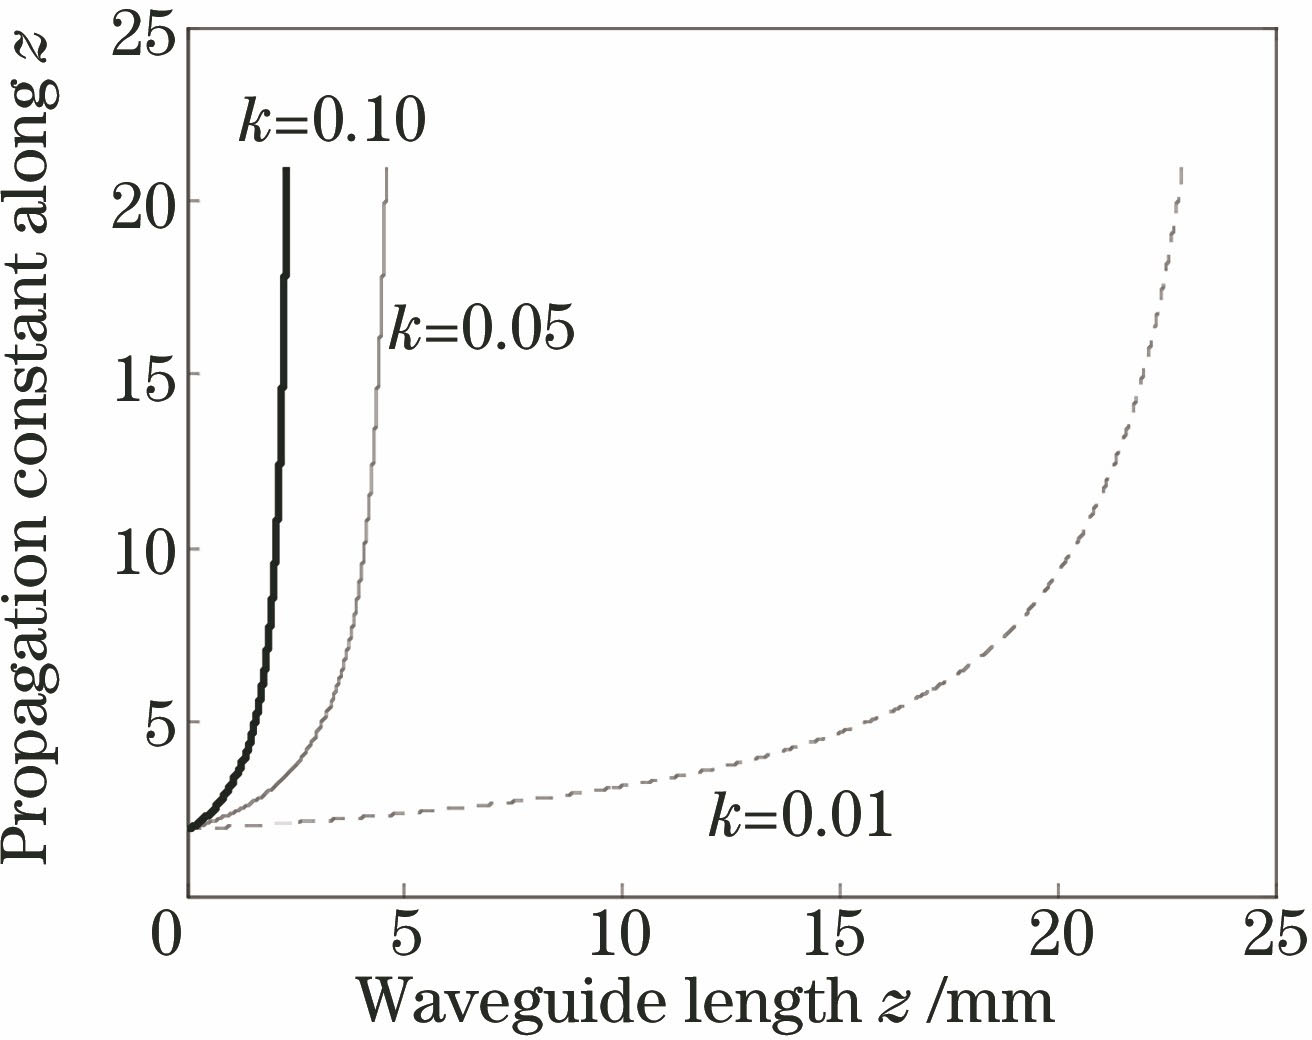 Influence of taper slope wavelength on dispersive of TE0 mode